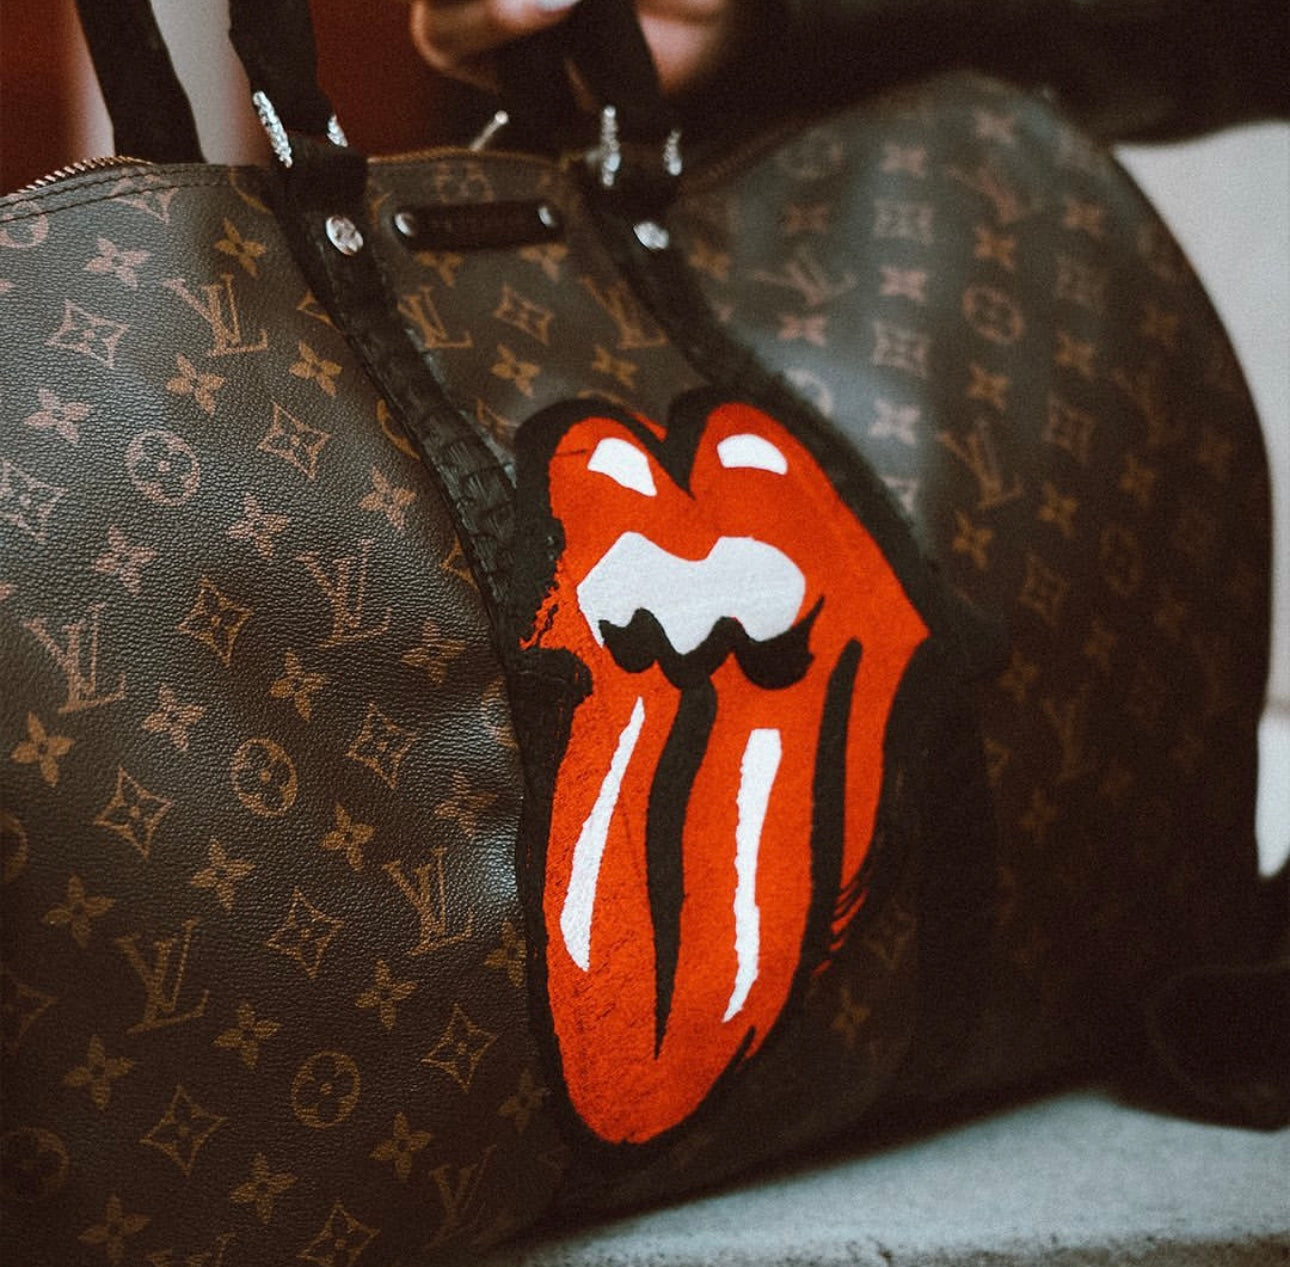 Philip Karto - Bag Stones Tongue Louis Vuitton Speedy 35